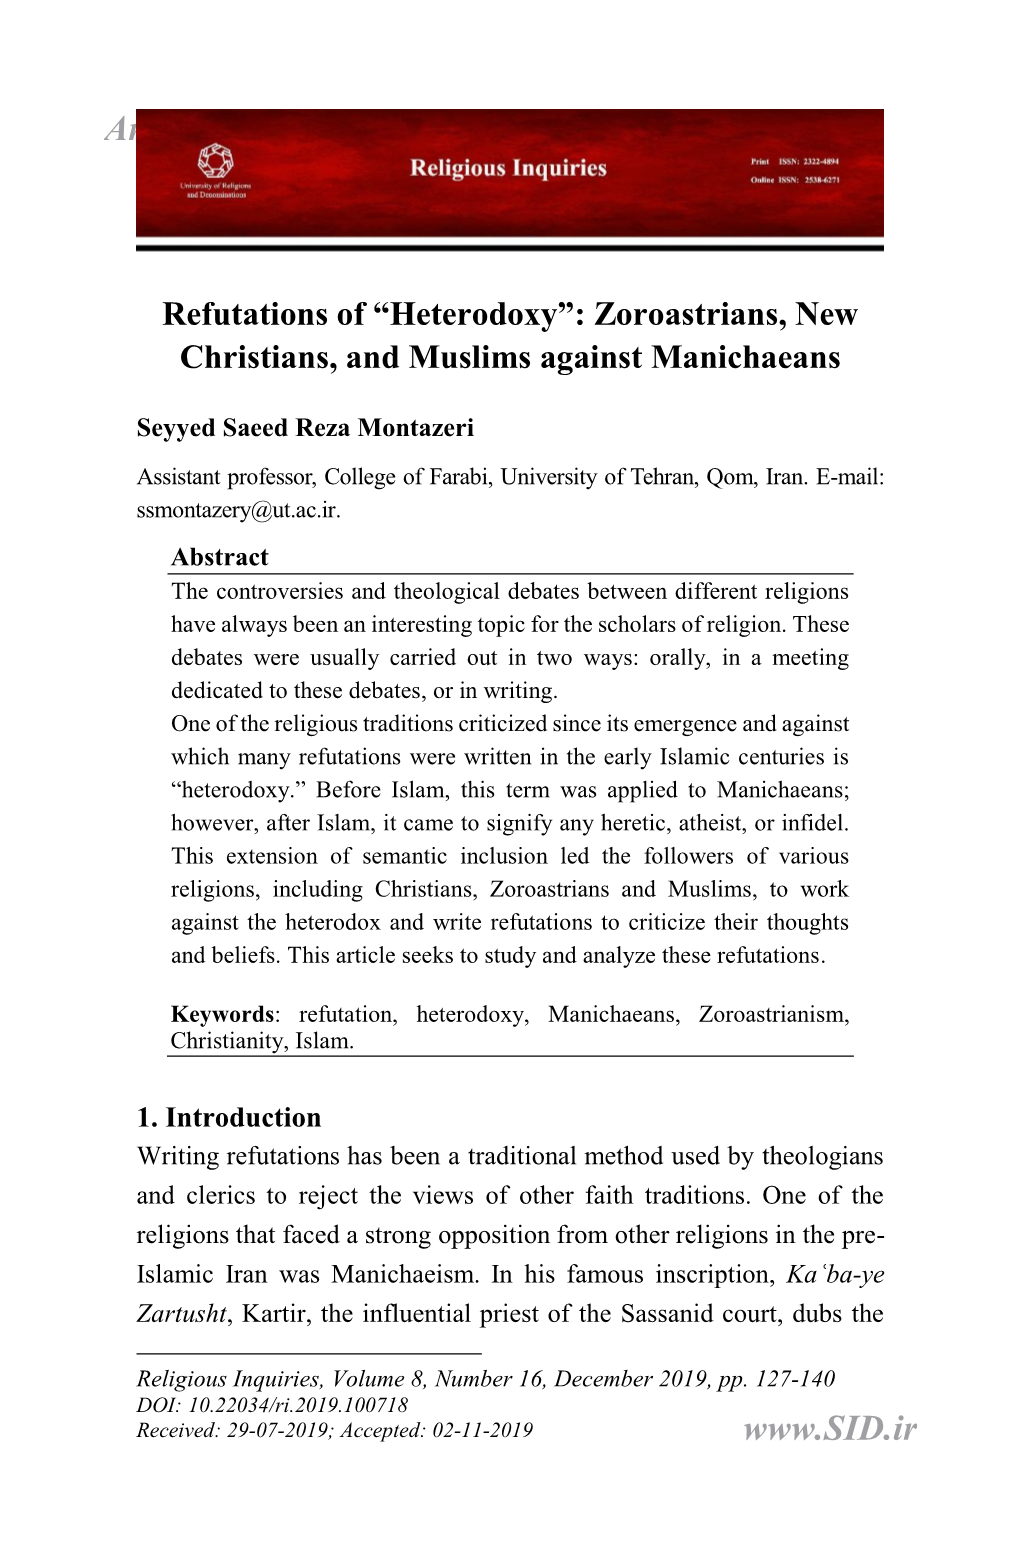 Refutations of “Heterodoxy”: Zoroastrians, New Christians, and Muslims Against Manichaeans